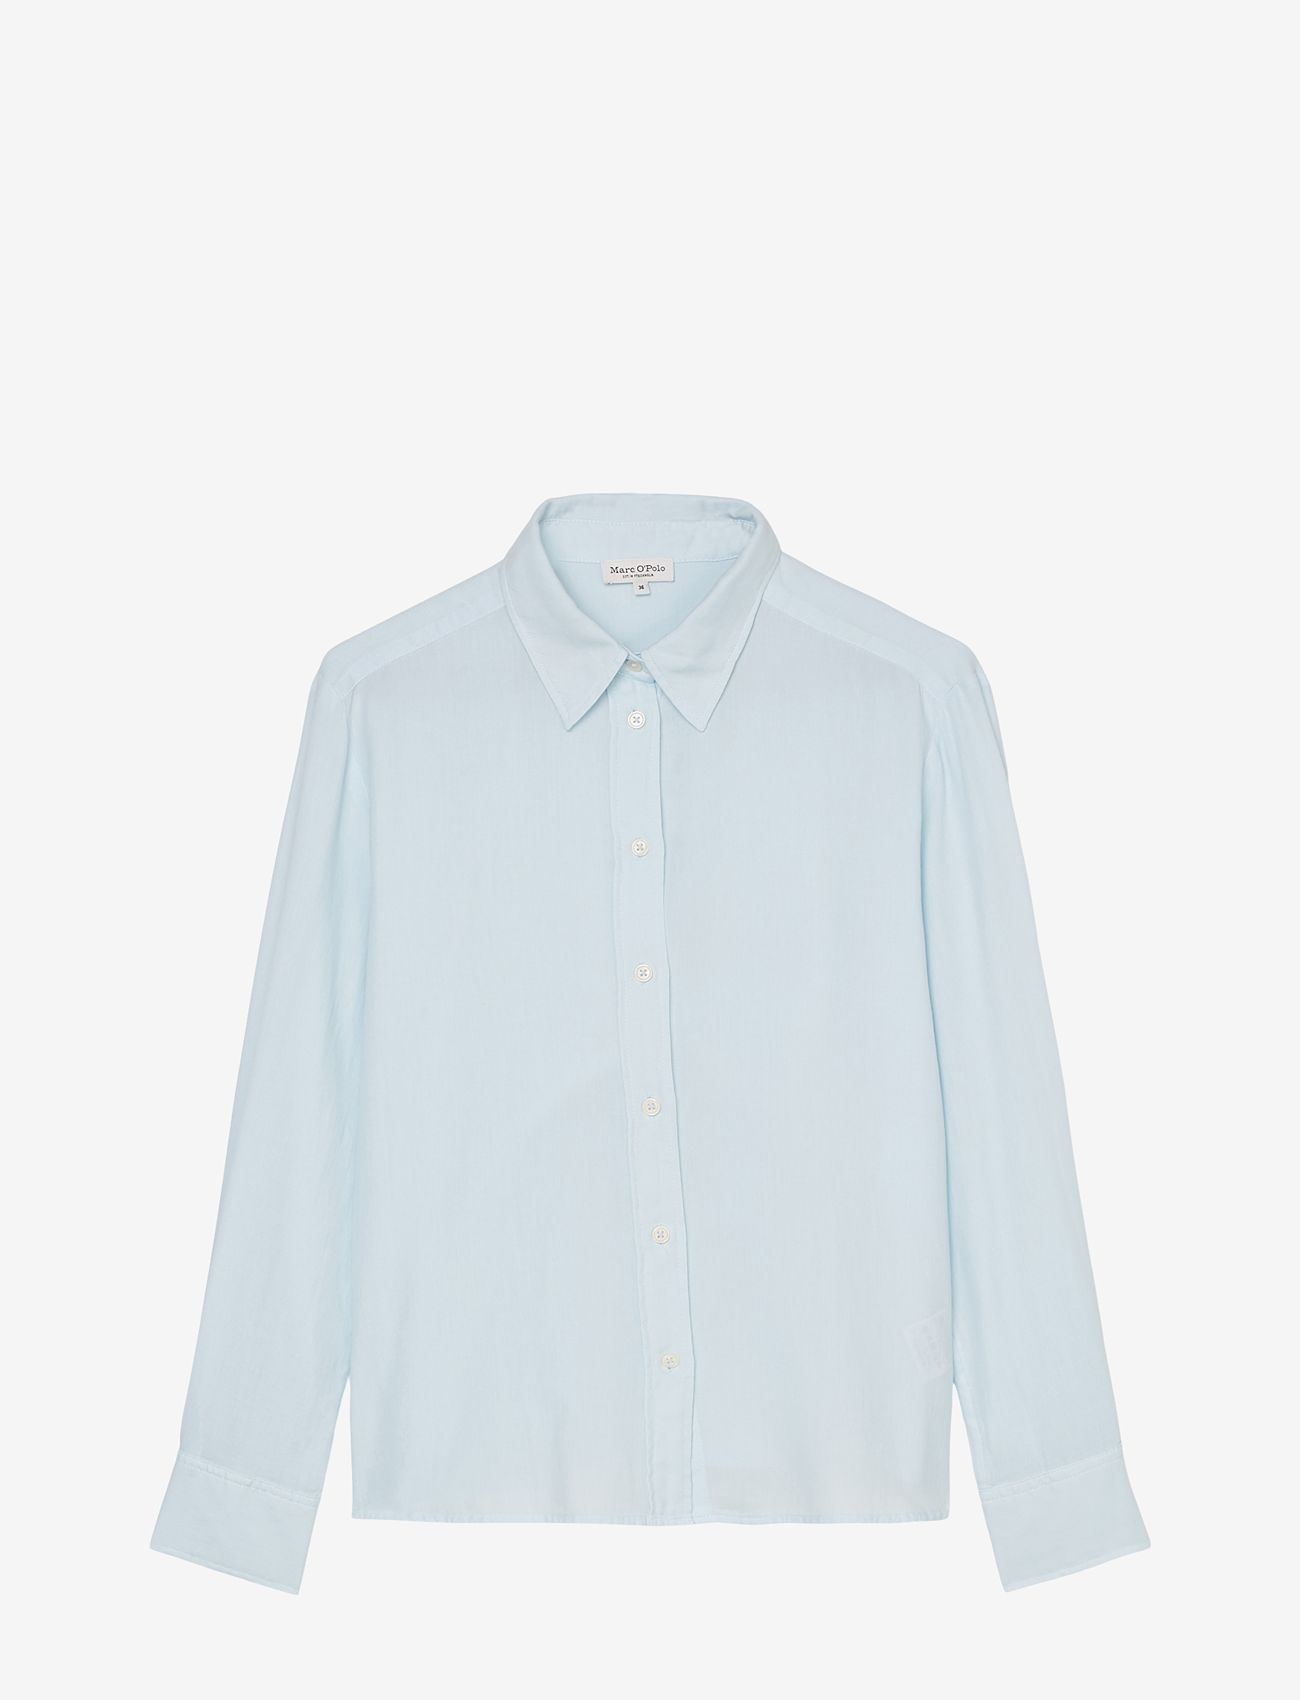 Marc O'Polo - SHIRTS/BLOUSES LONG SLEEVE - long-sleeved blouses - spring sky - 0